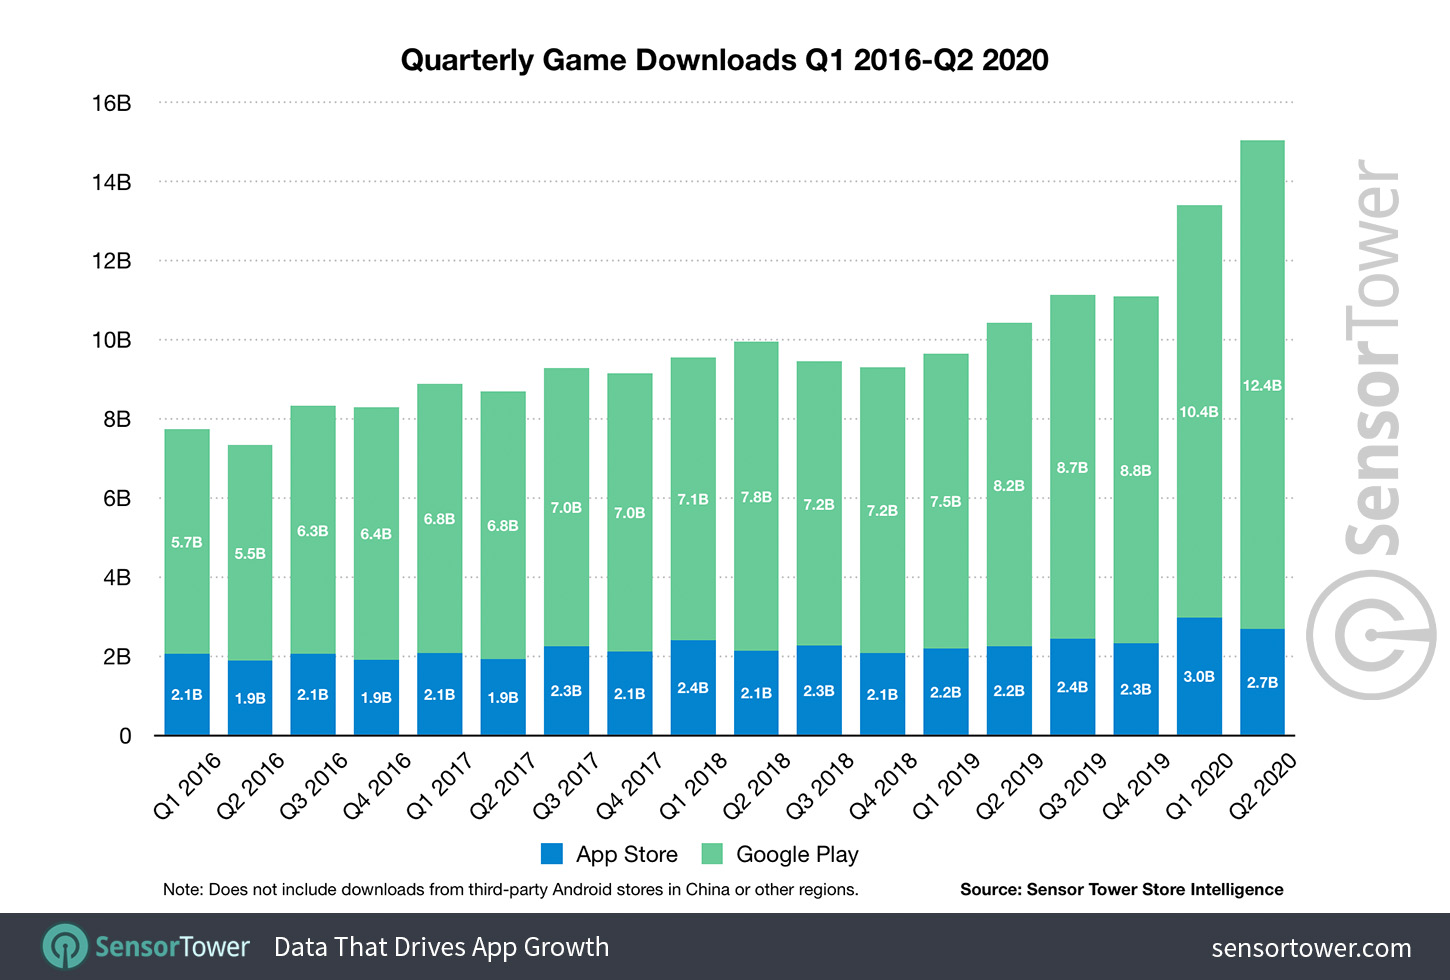 Quarterly Game Downloads Q1 2016 to Q2 2020